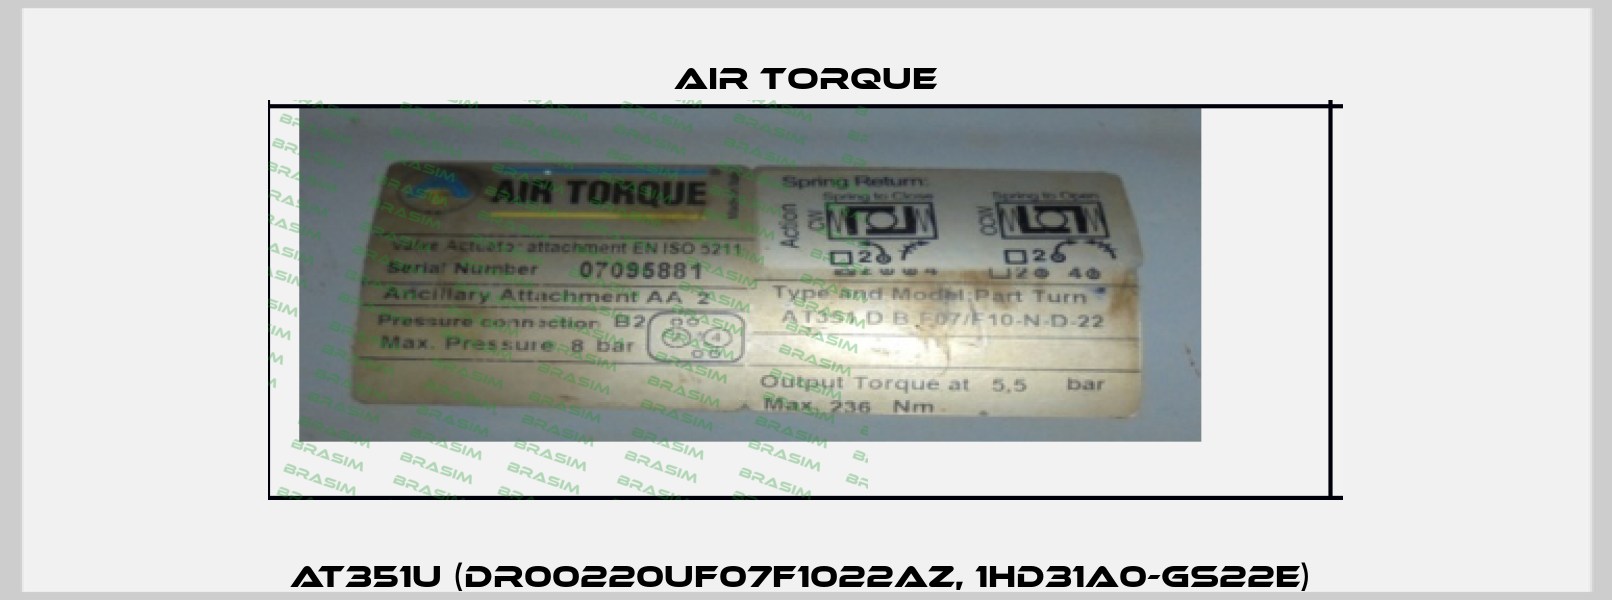 AT351U (DR00220UF07F1022AZ, 1HD31A0-GS22E)  Air Torque